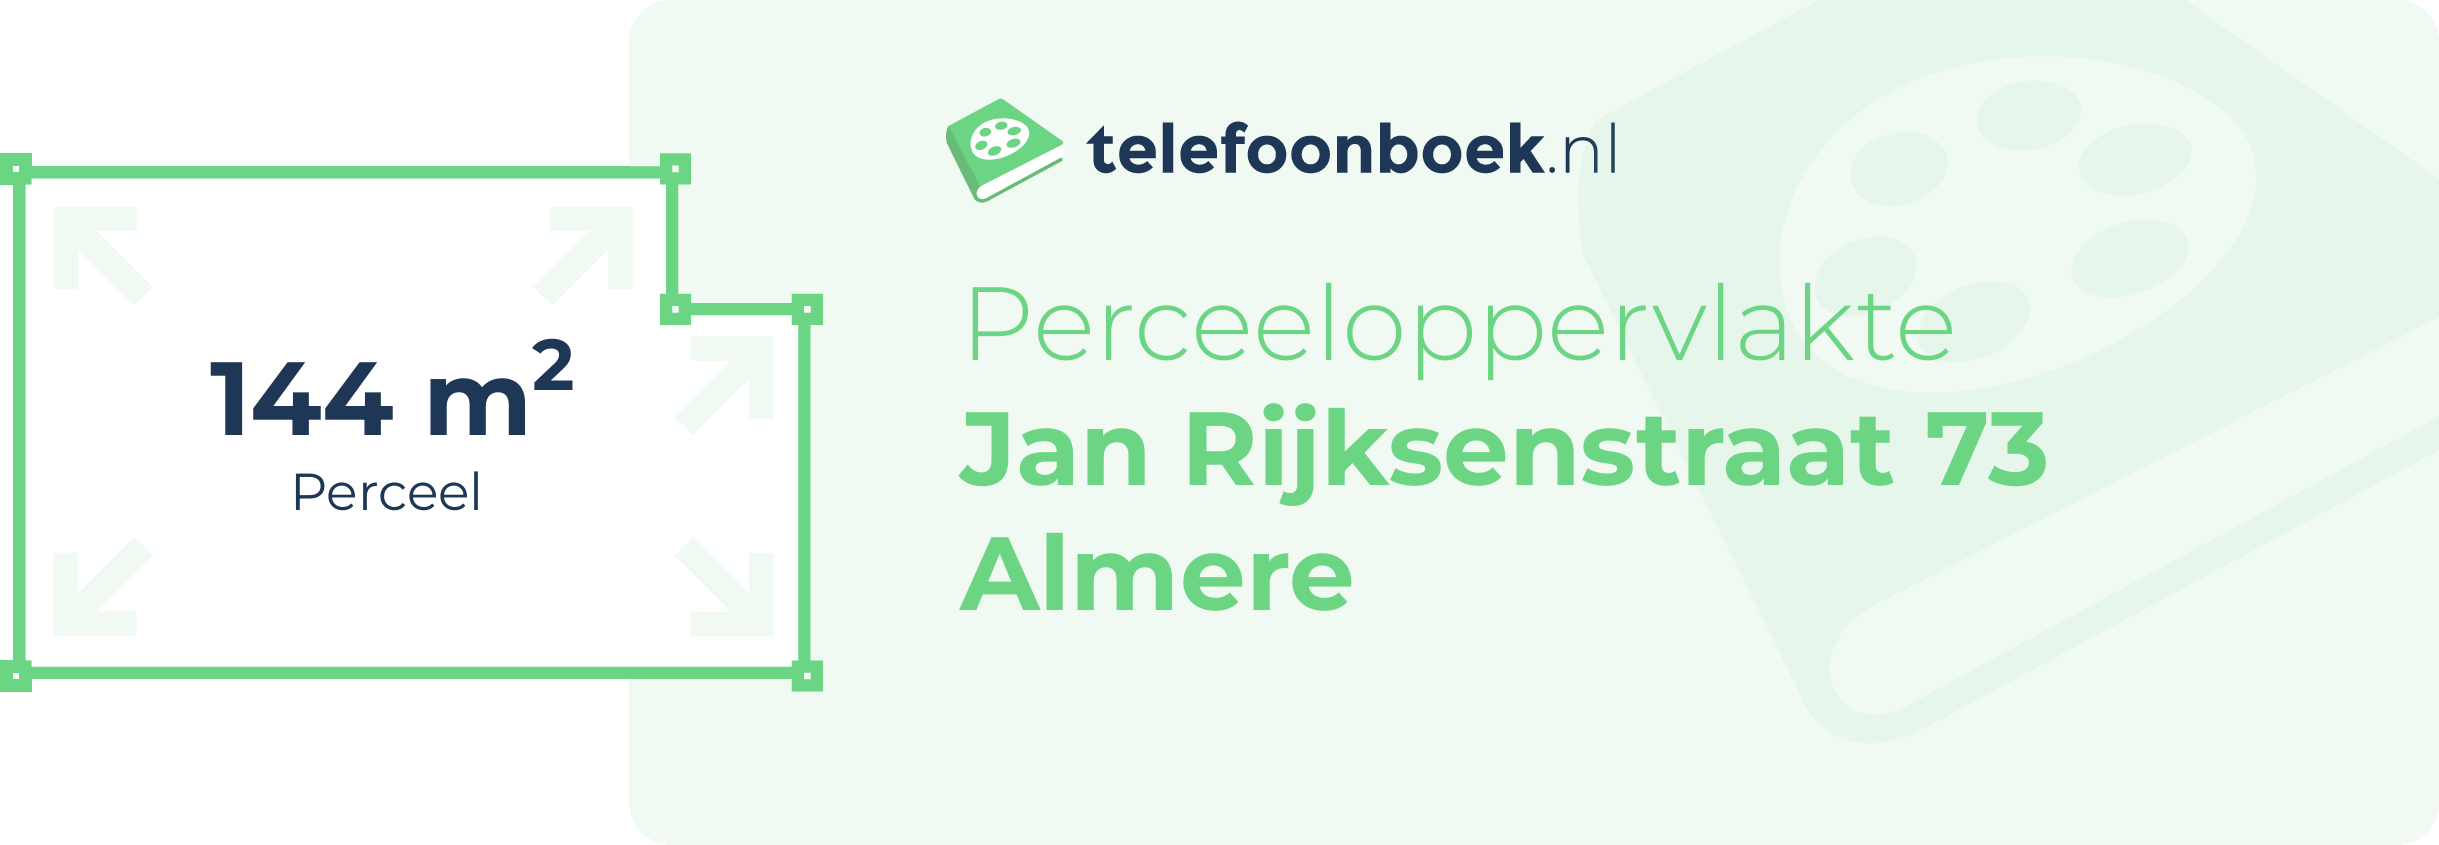 Perceeloppervlakte Jan Rijksenstraat 73 Almere